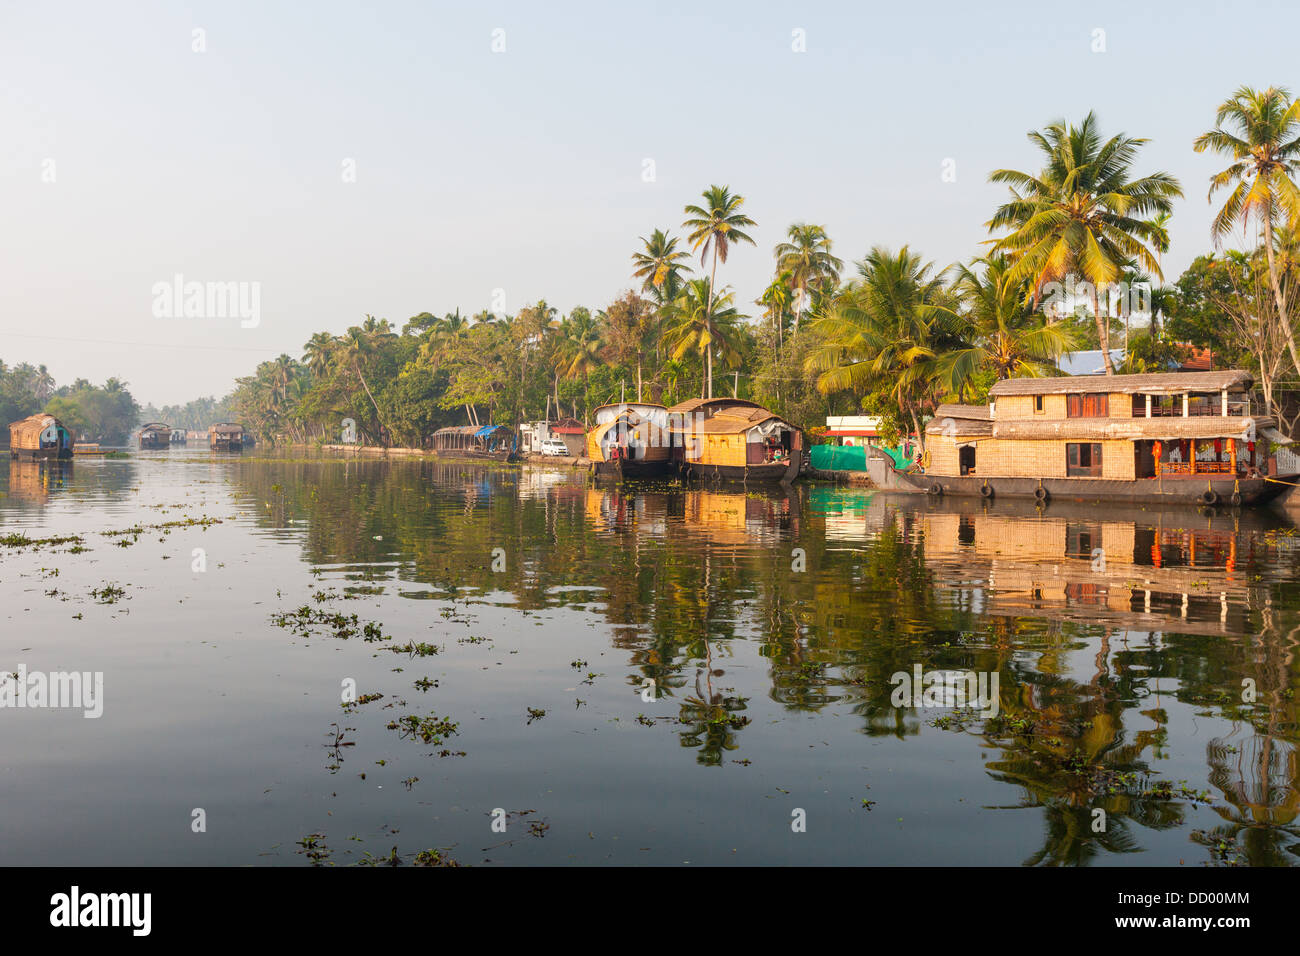 Cruise houseboats on the lakes of Kerala. South India Stock Photo